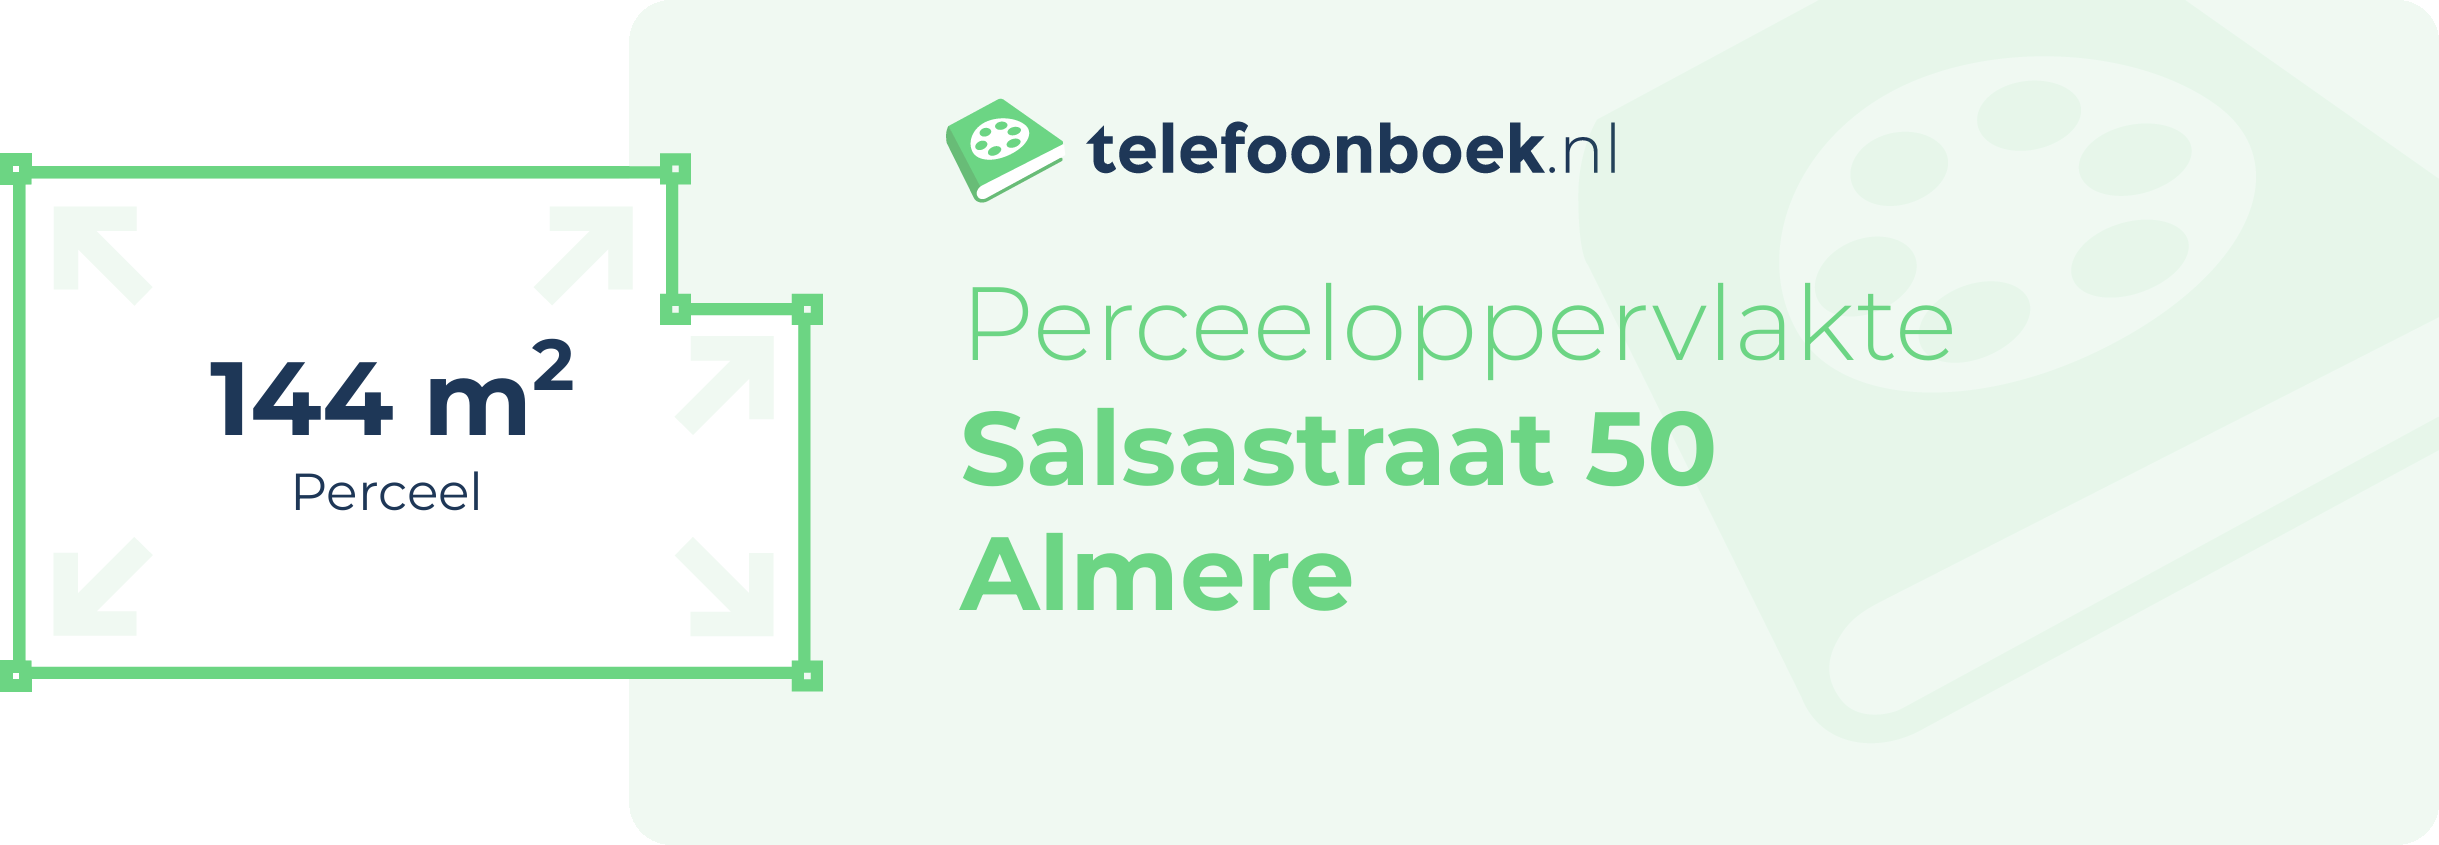 Perceeloppervlakte Salsastraat 50 Almere